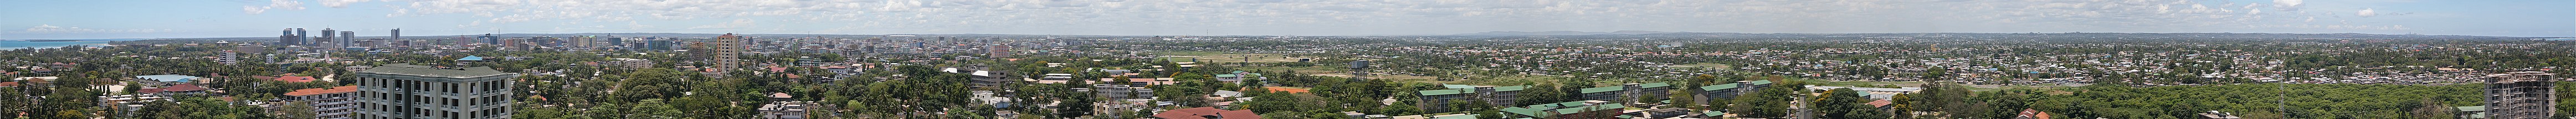 City center of Dar es Salaam, by Muhammad Mahdi Karim